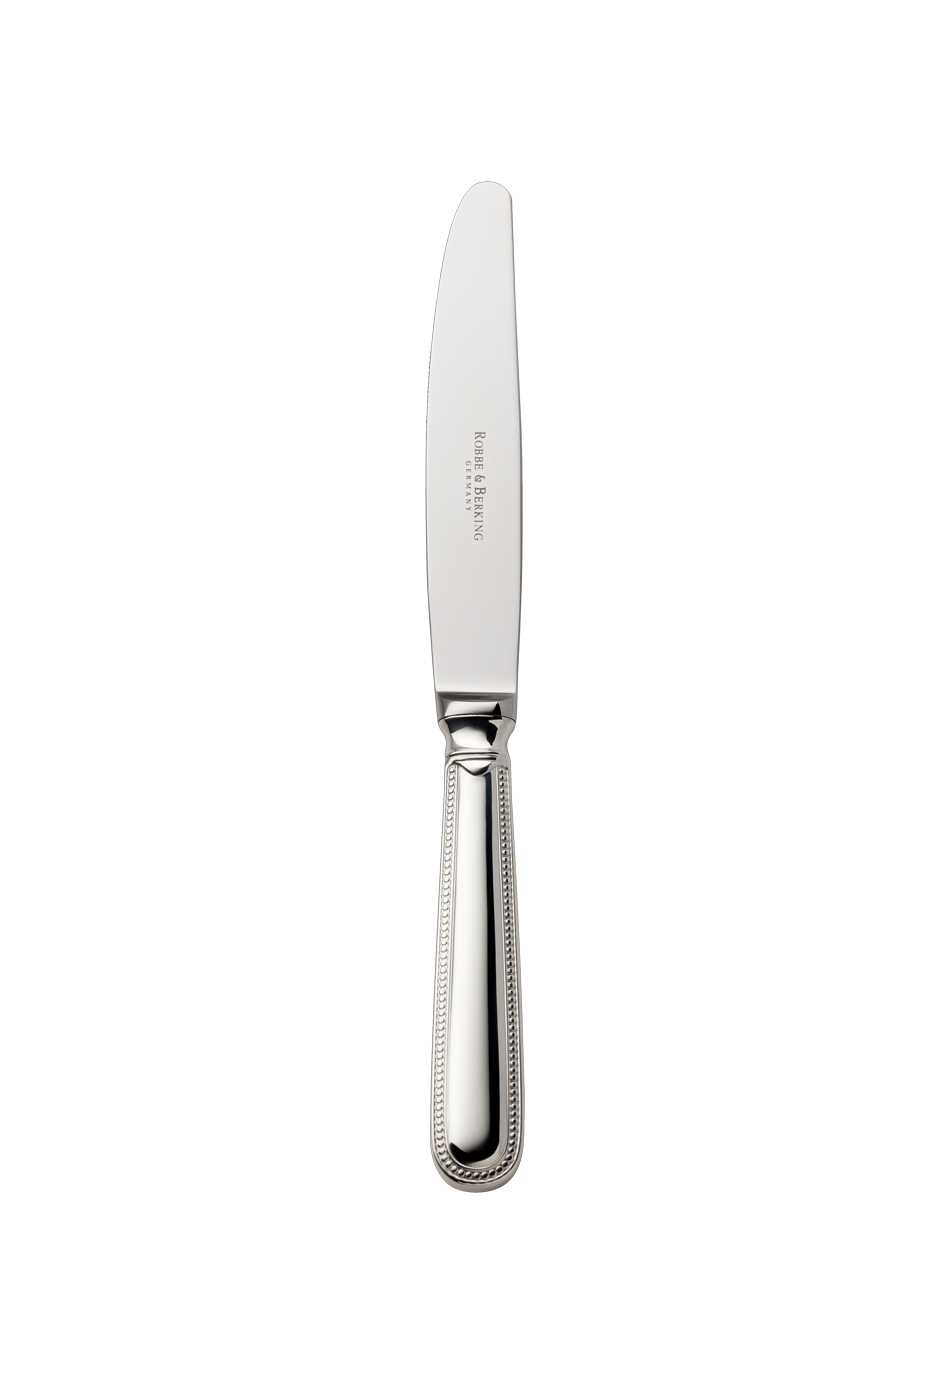 Franz. Perl Menu Knife (150g massive silverplated)